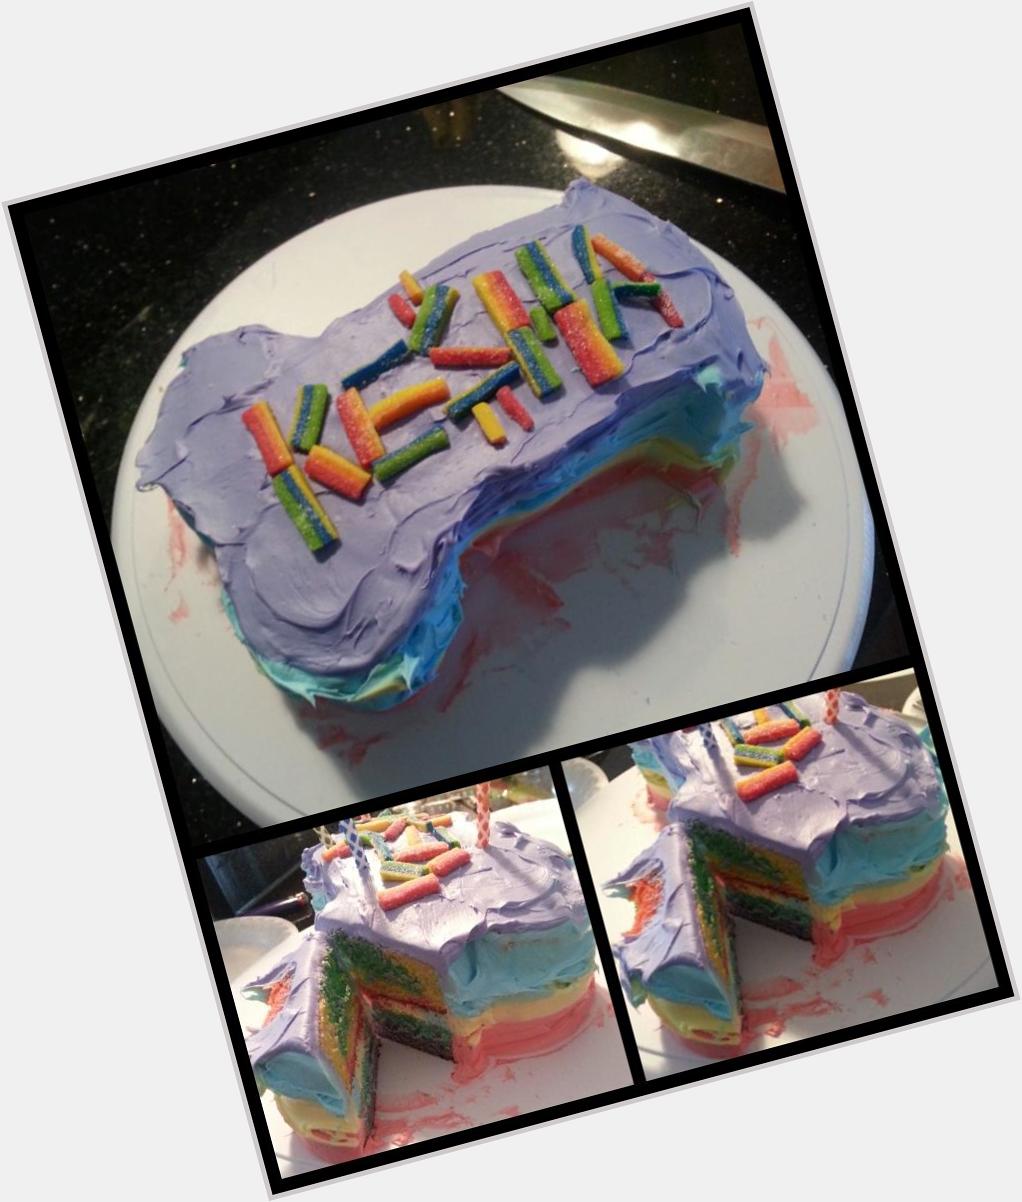 HAPPY BIRTHDAY, KESHA. I made you a penis cake will rainbow innards cause idk rraaiinnbboowwss 